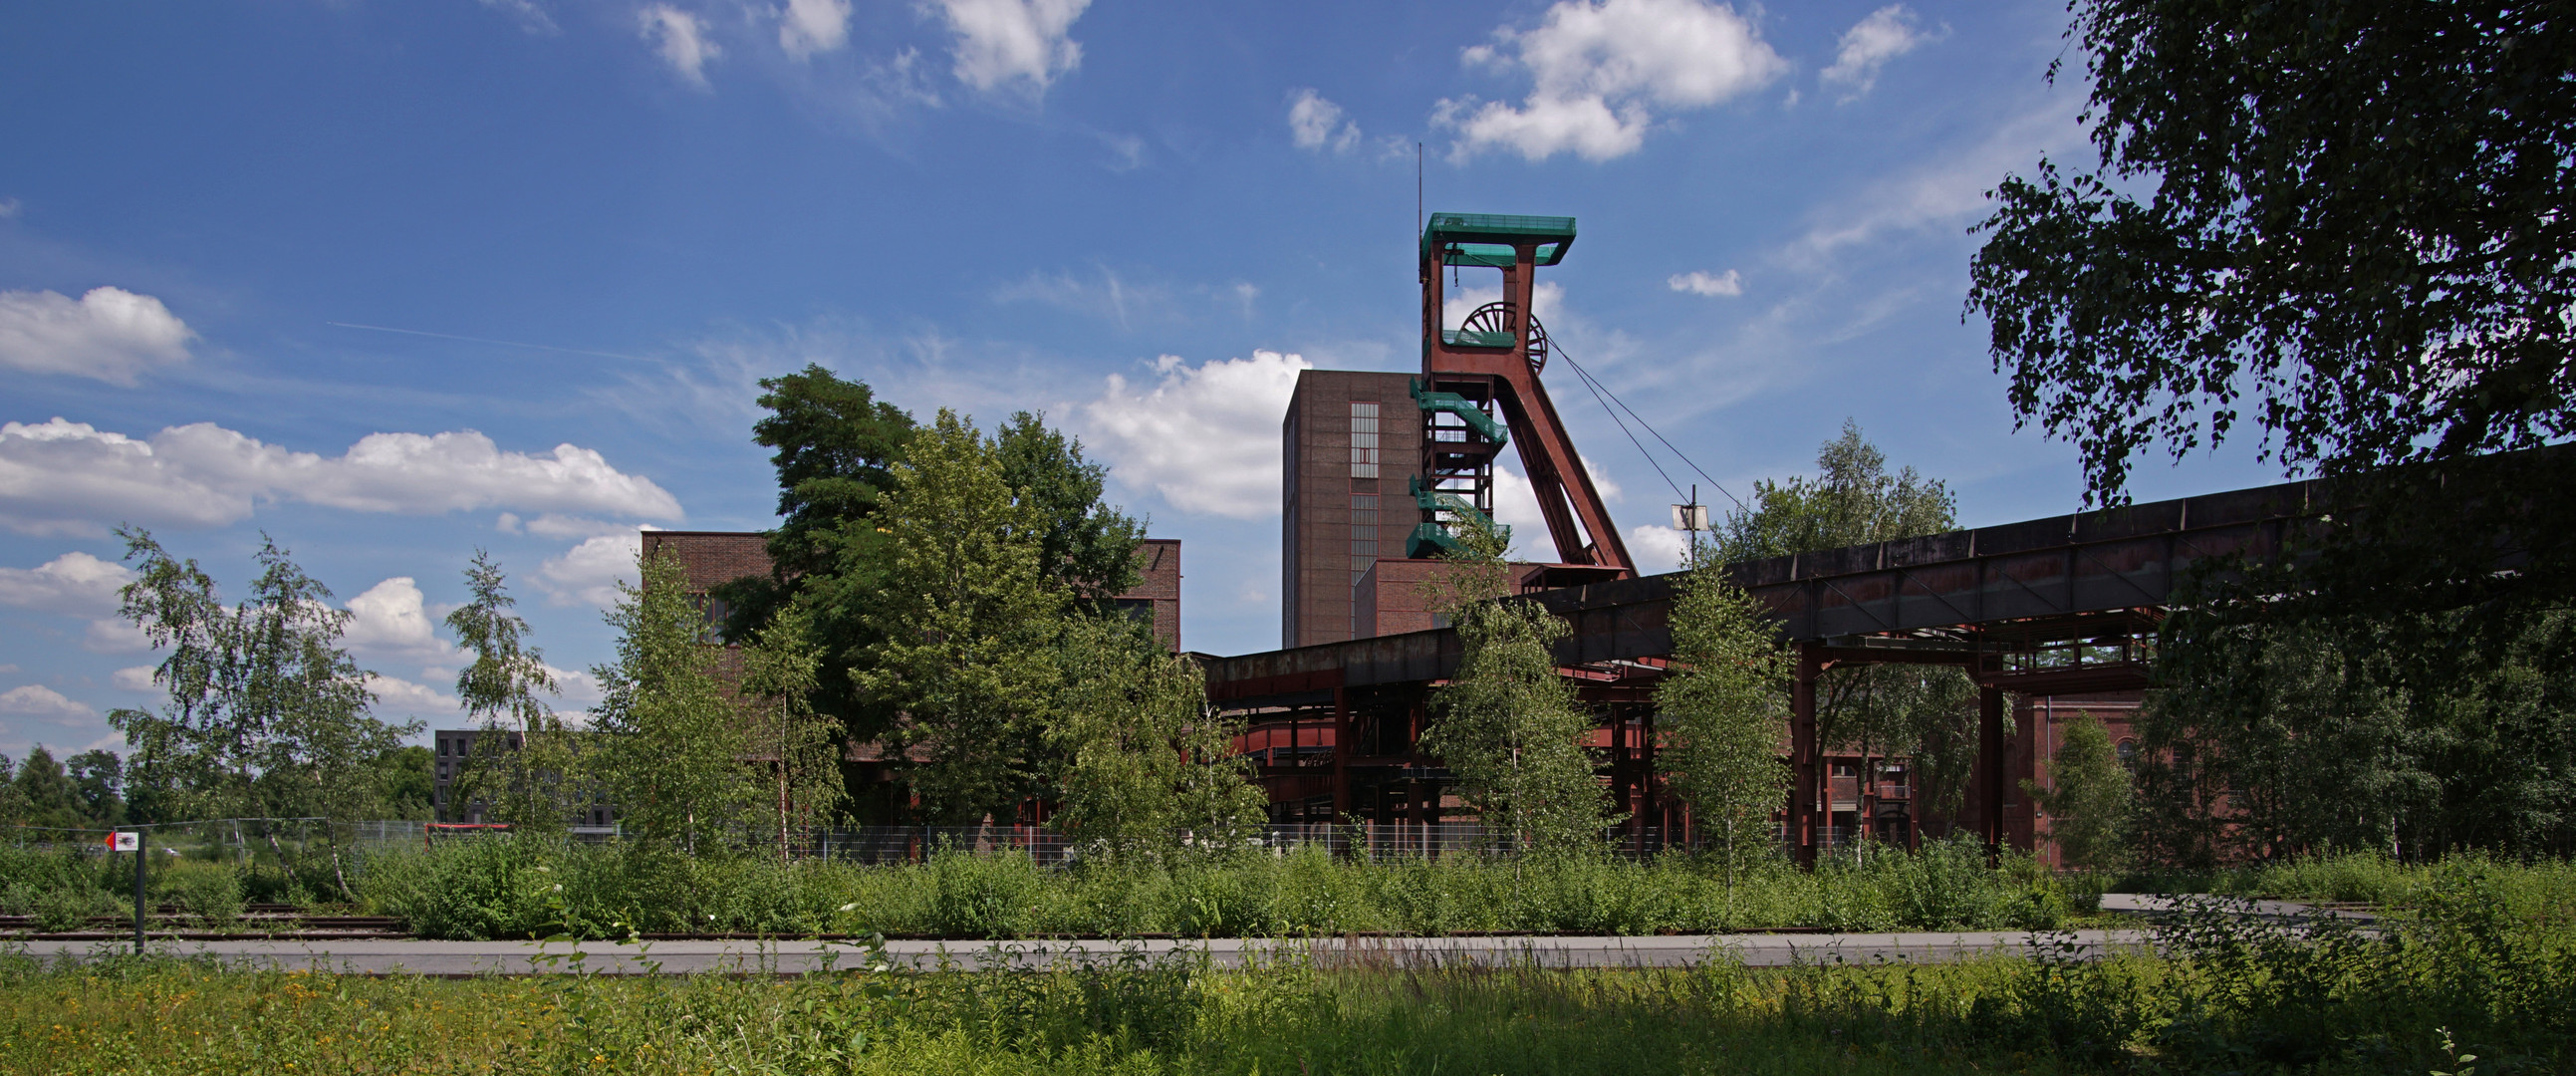 Zeche Zollverein 49